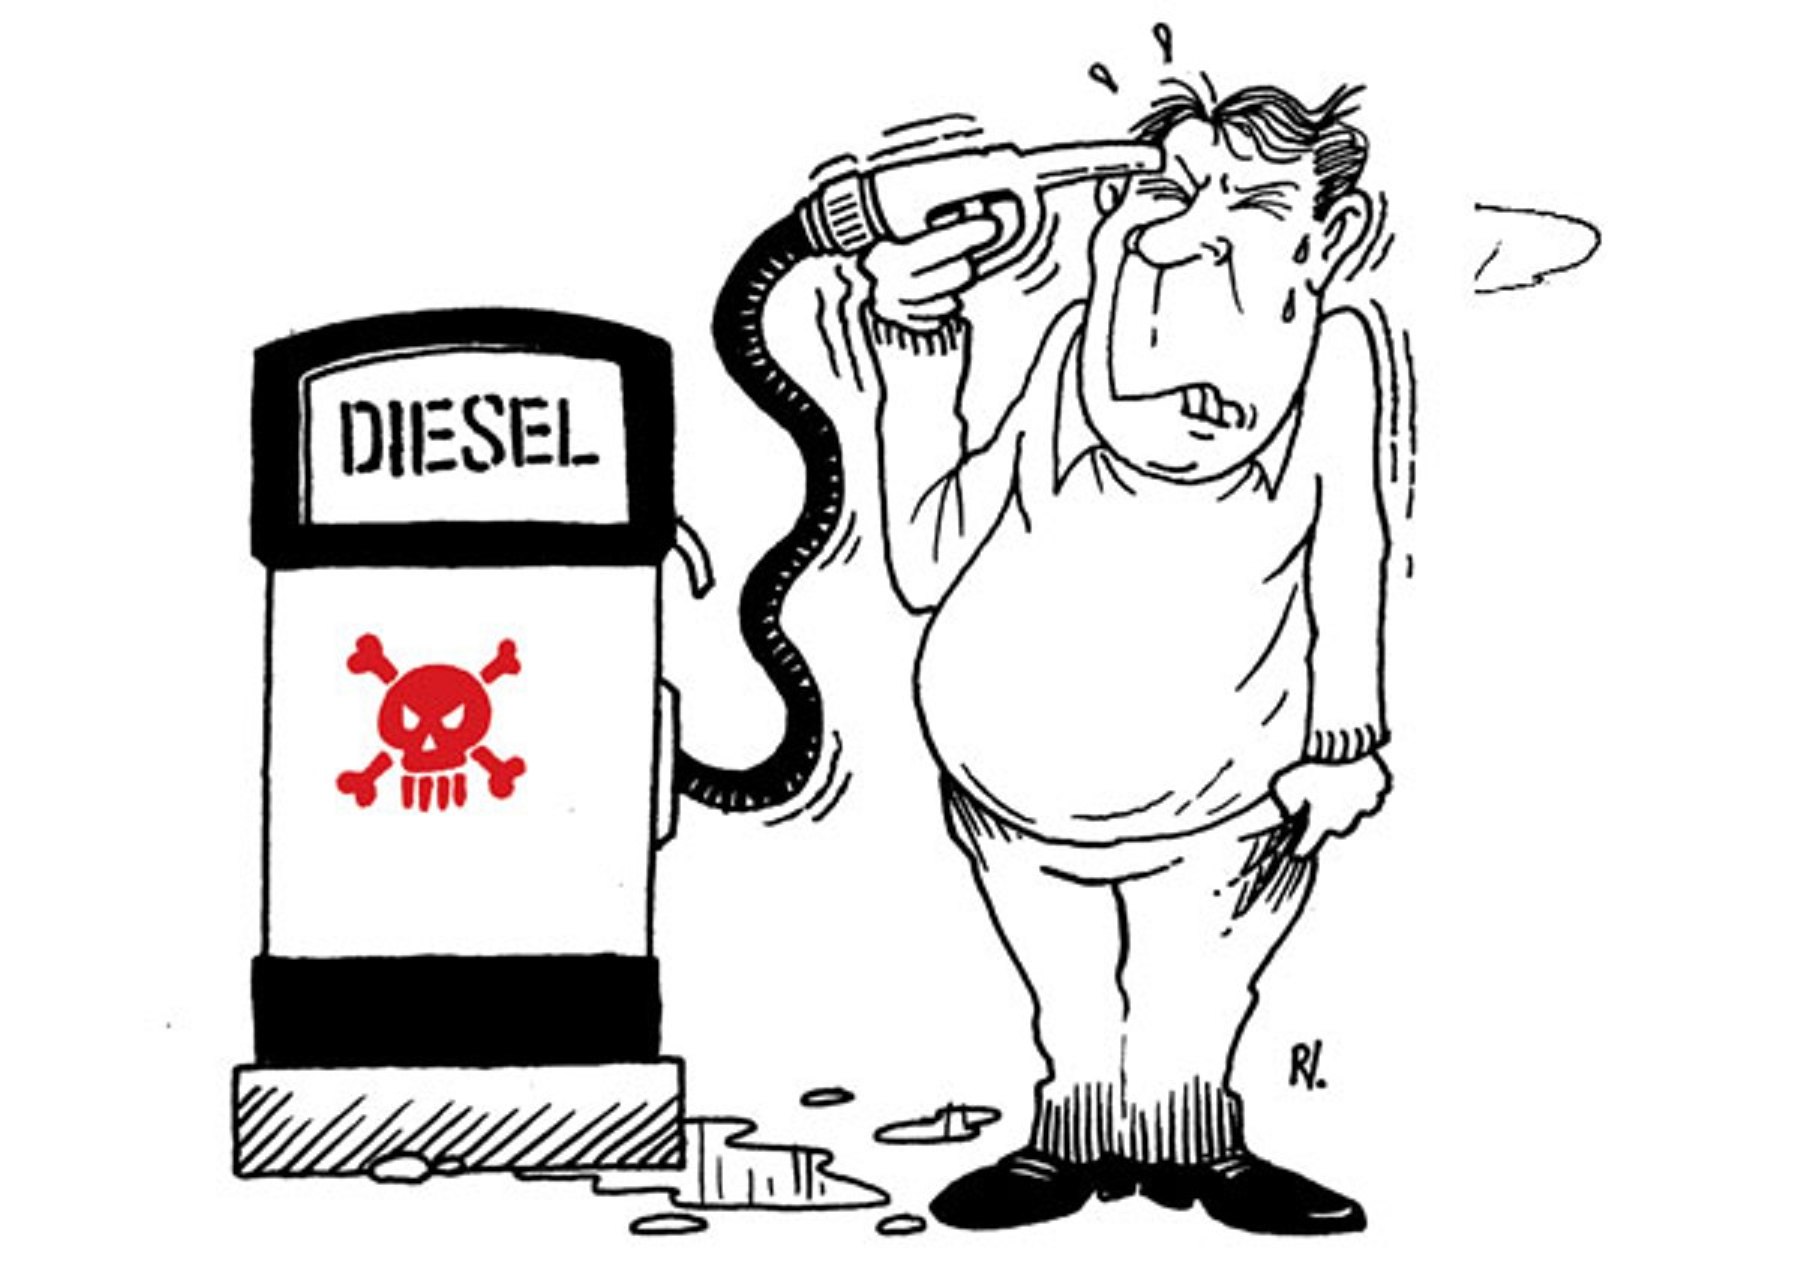 https://collidecolumn.files.wordpress.com/2012/07/diesel-addiction-can-be-dangerous-cartoon-courtesy-cse-india.jpg